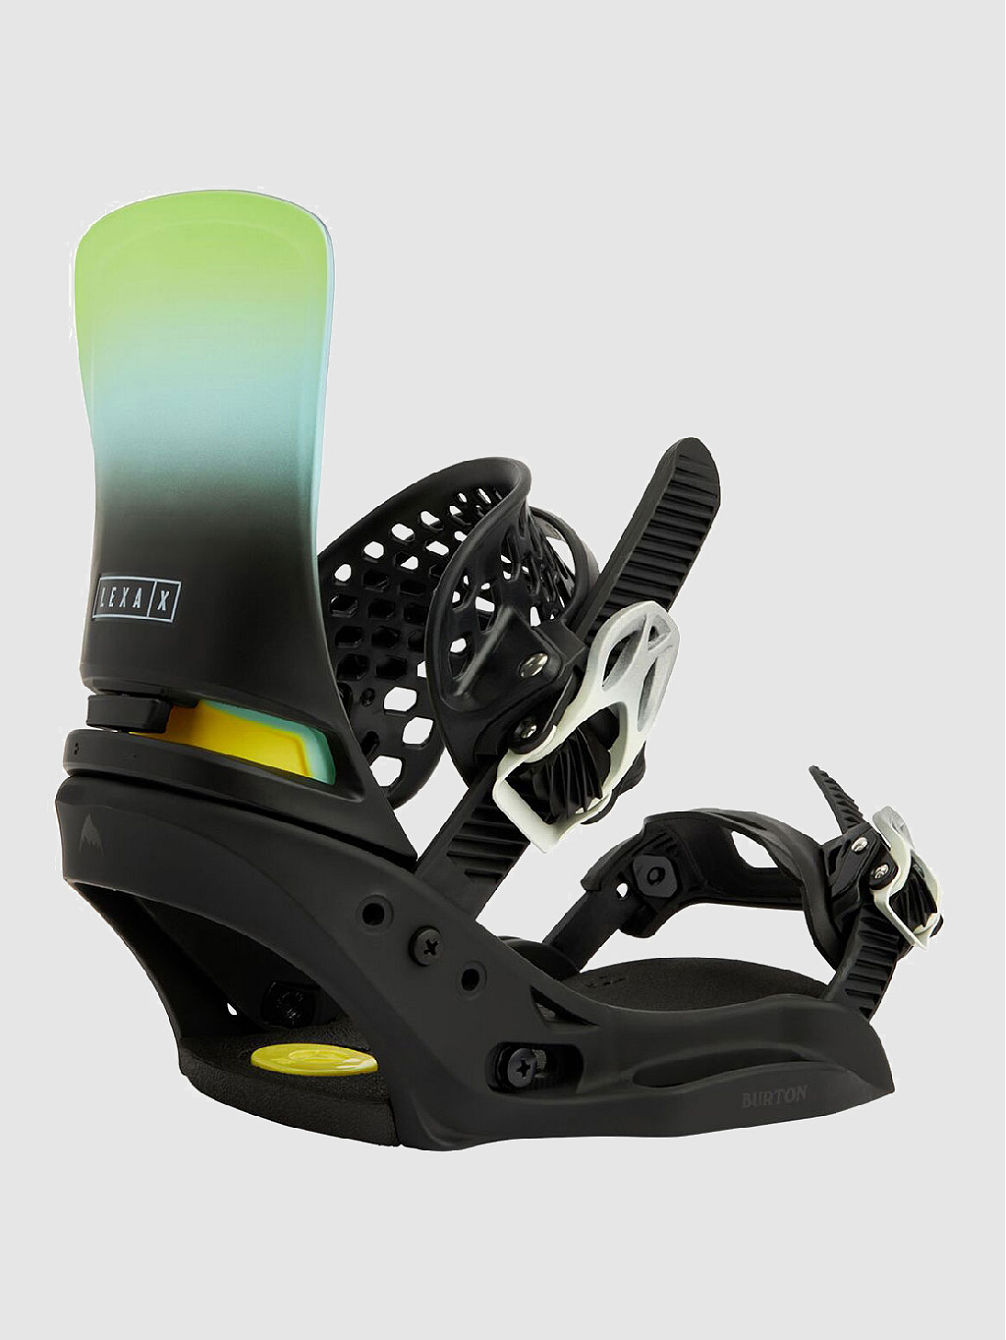 Lexa X EST 2022 Snowboardbinding